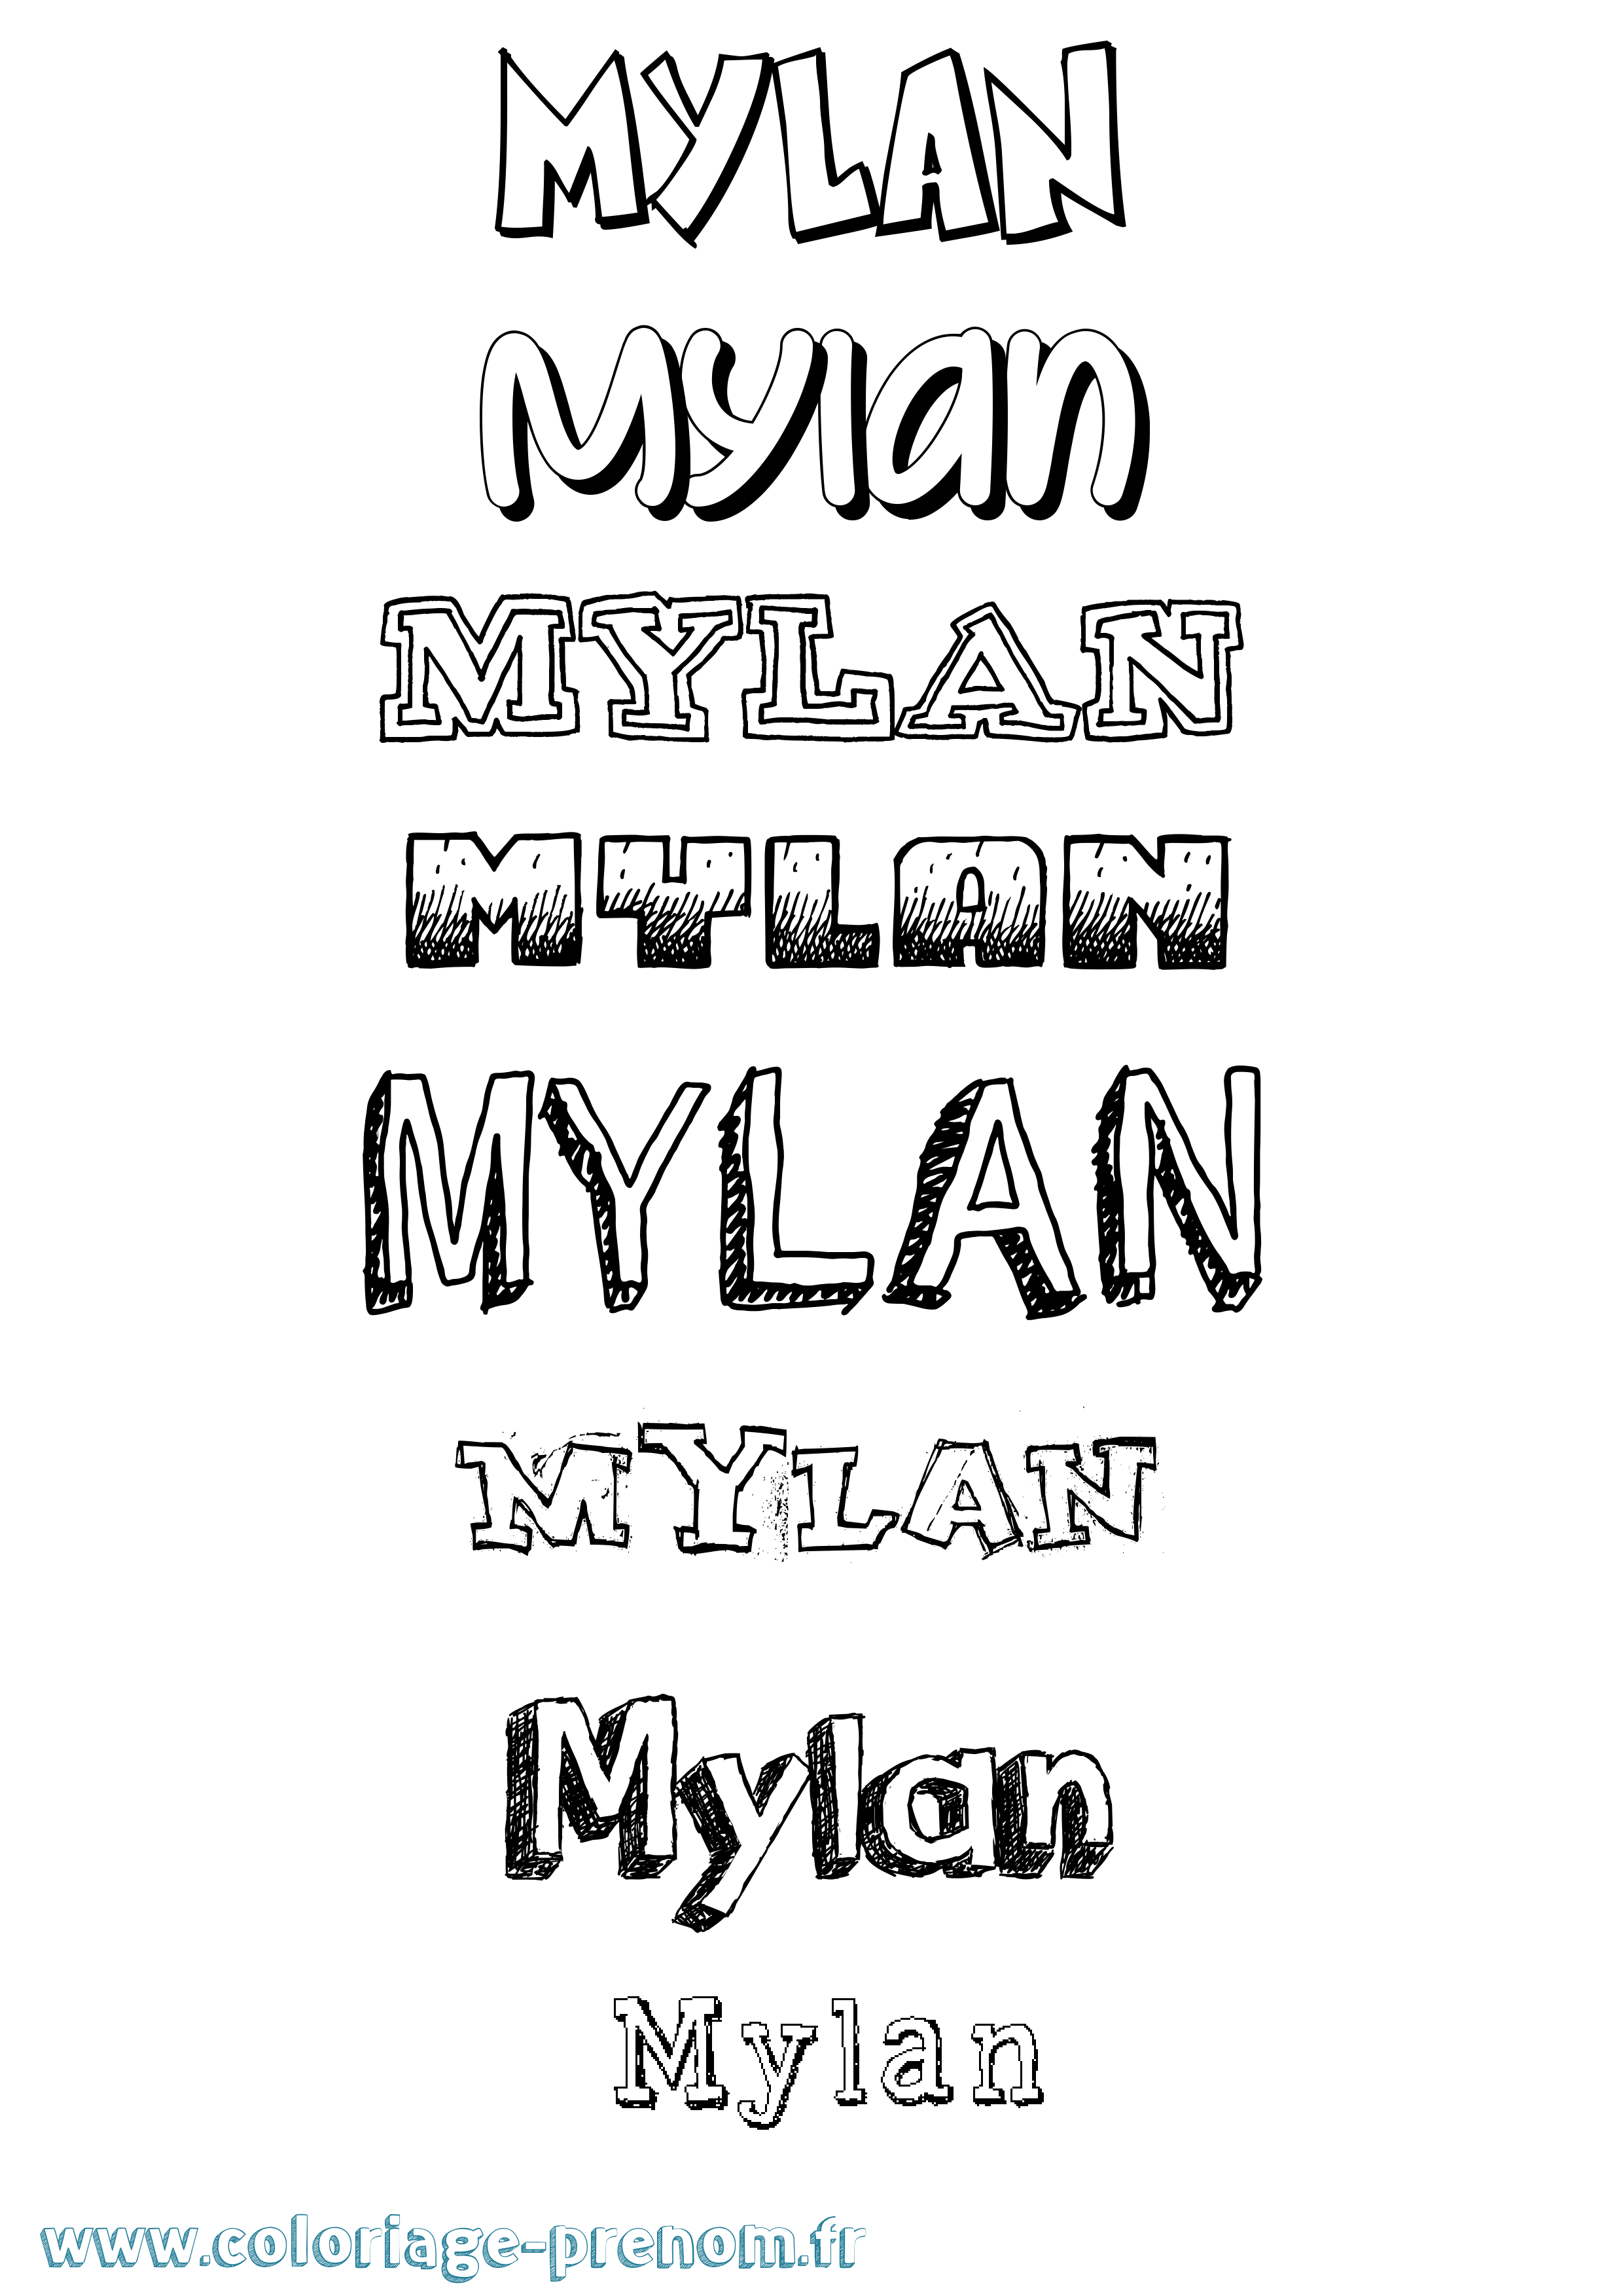 Coloriage prénom Mylan